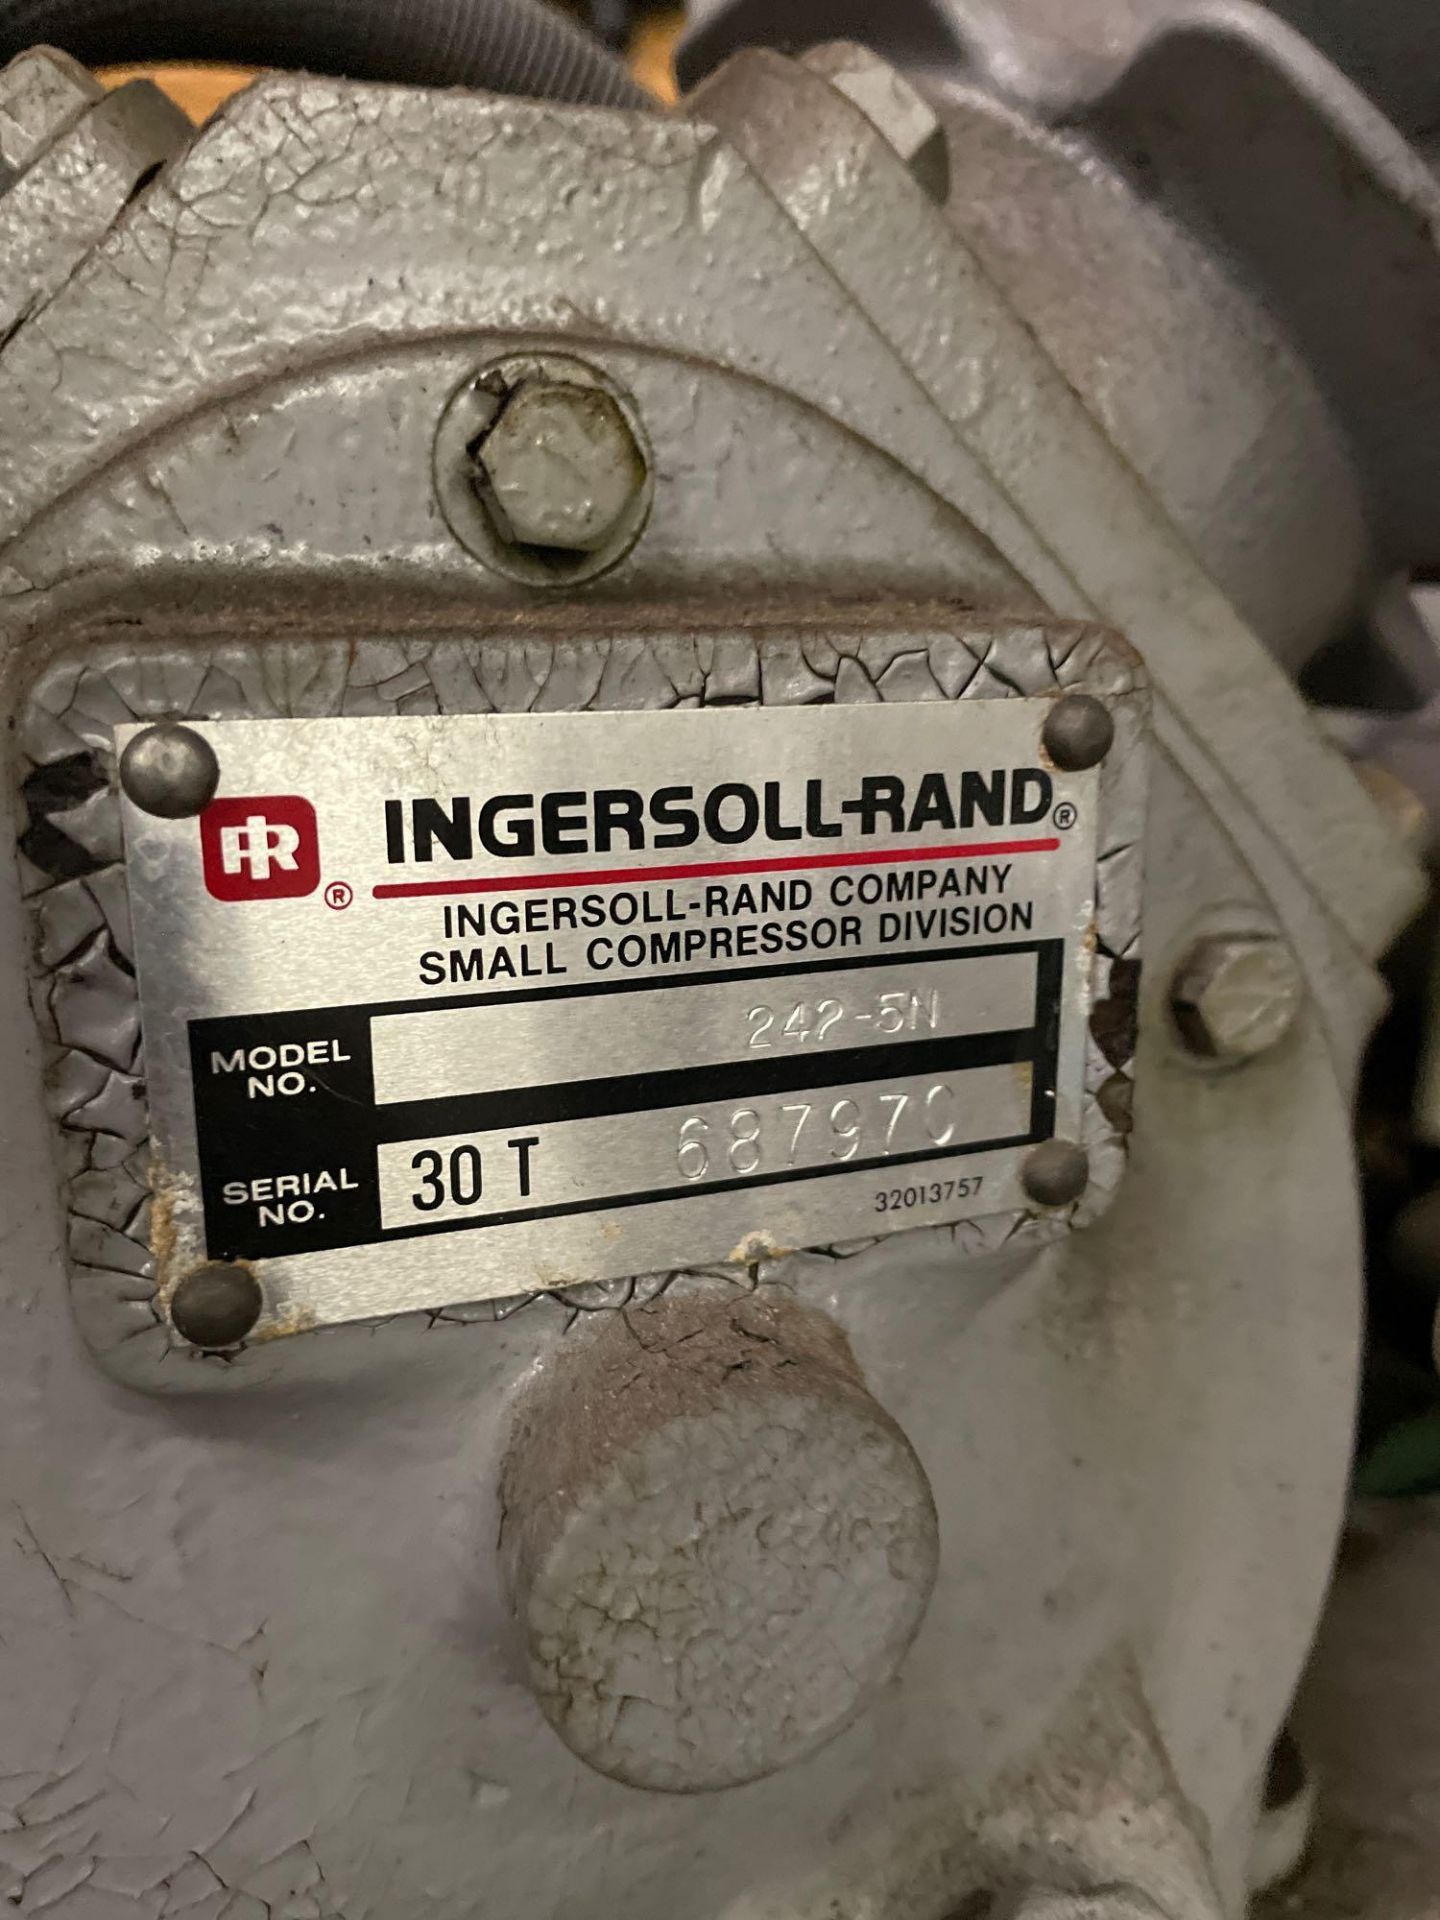 5 HP Ingersoll Rand T30 Reciprocating Air Compressor, m/n 242-5N, s/n 30T 529374 - Image 4 of 4